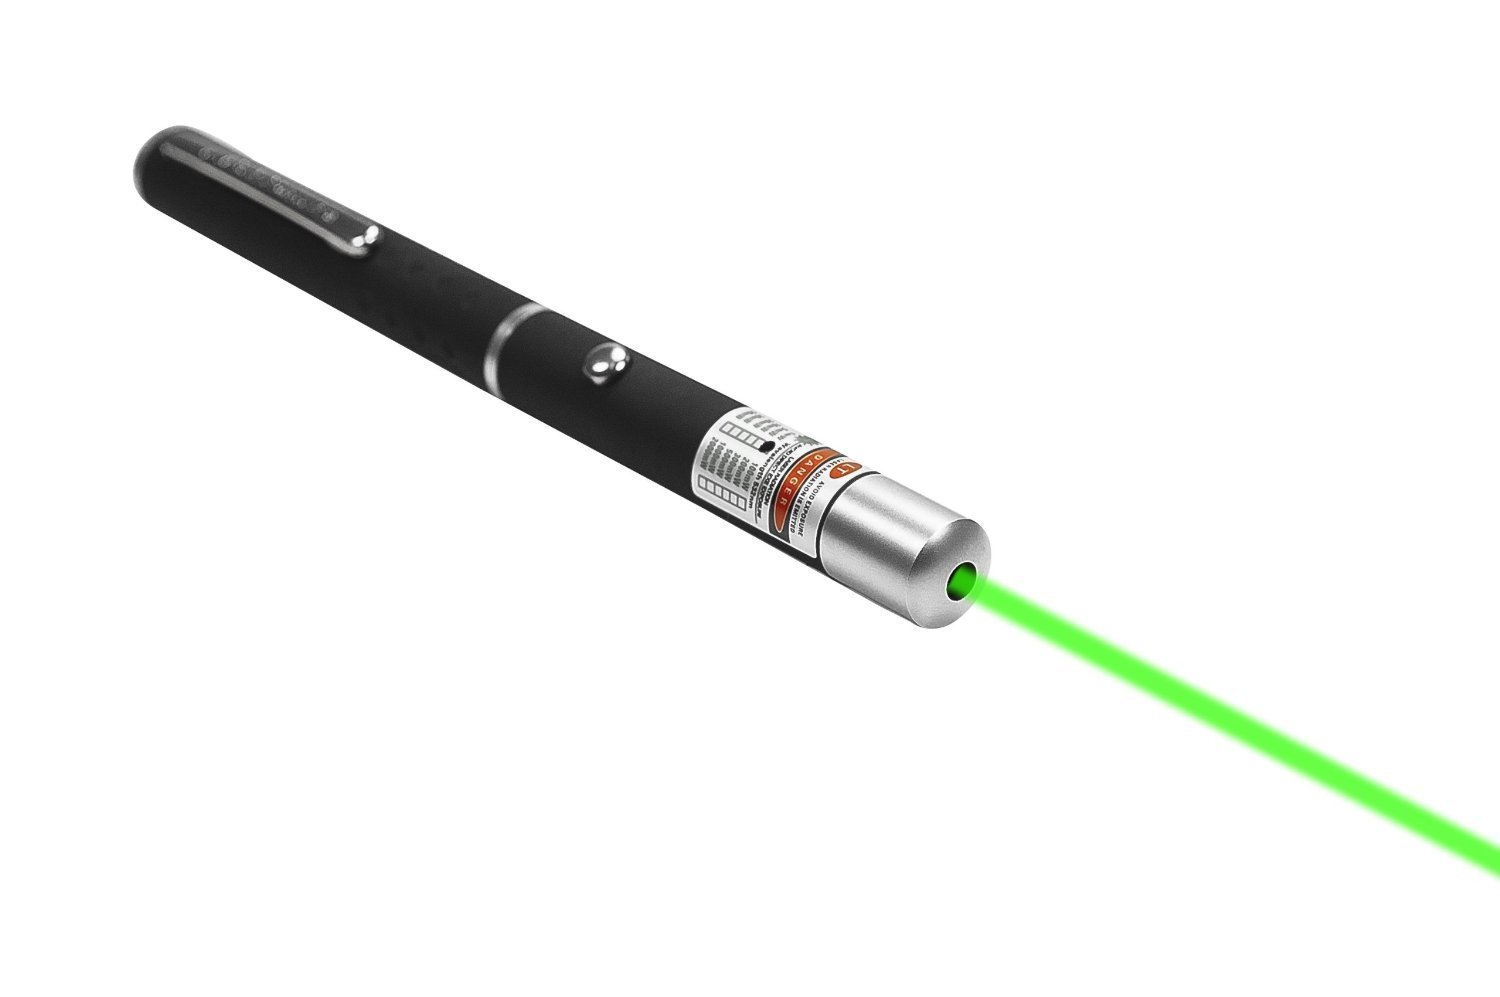 Указка лазер зеленый луч Green Laser Pointer оптом